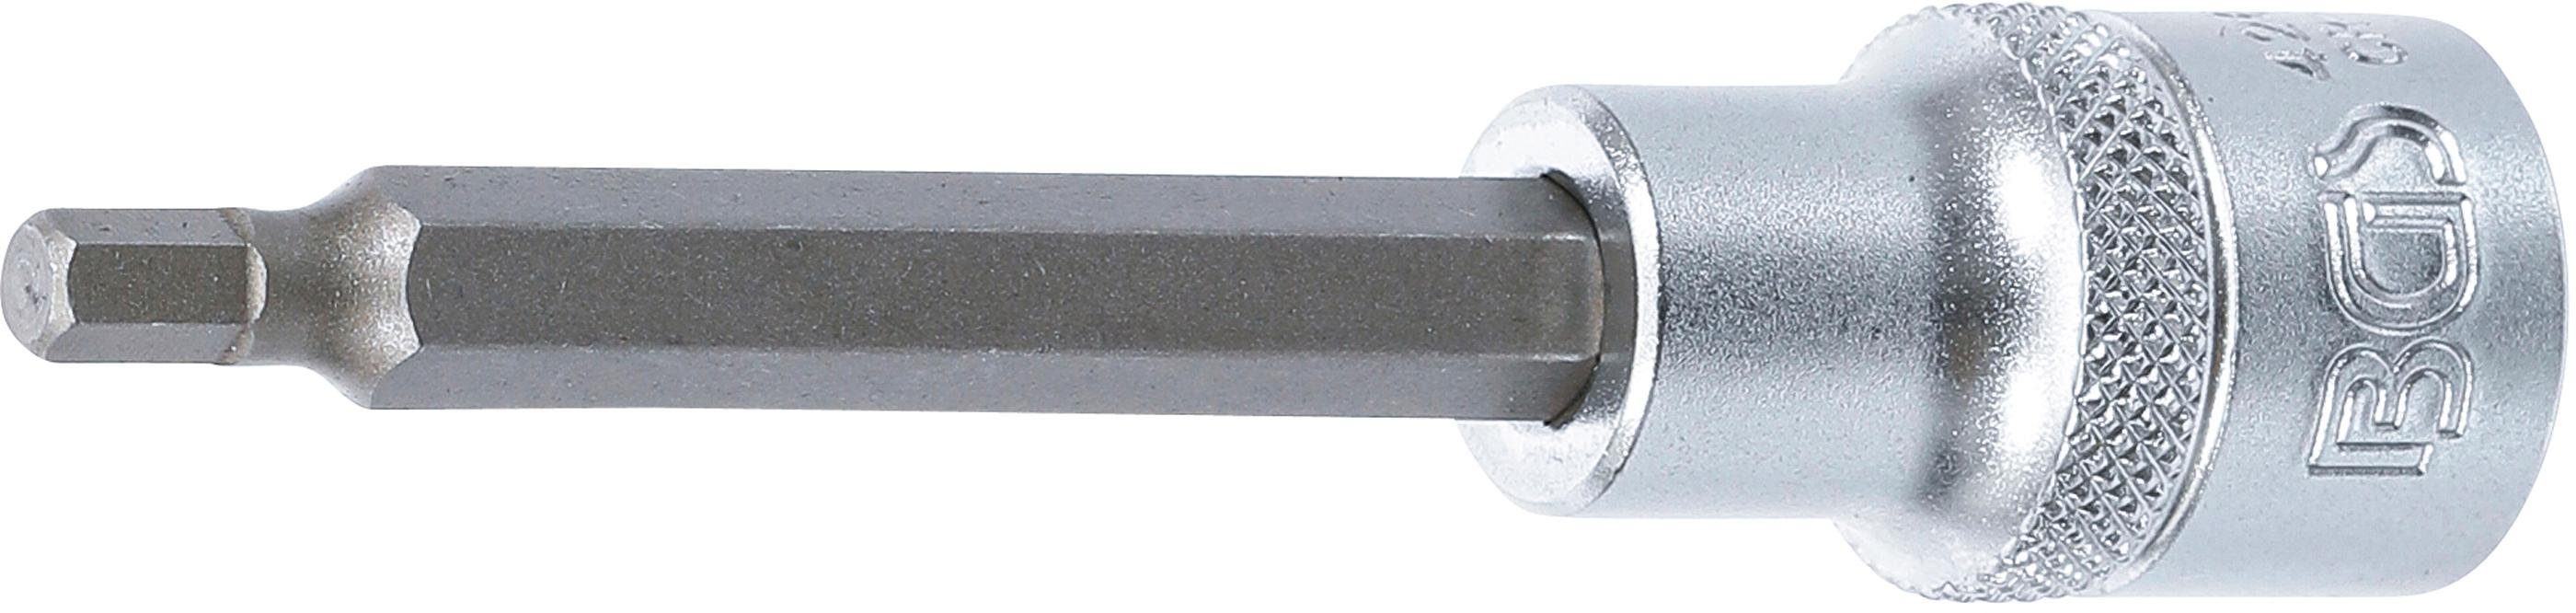 BGS technic Sechskant-Bit Bit-Einsatz, Länge 100 mm, Antrieb Innenvierkant 12,5 mm (1/2), Innensechskant 5 mm